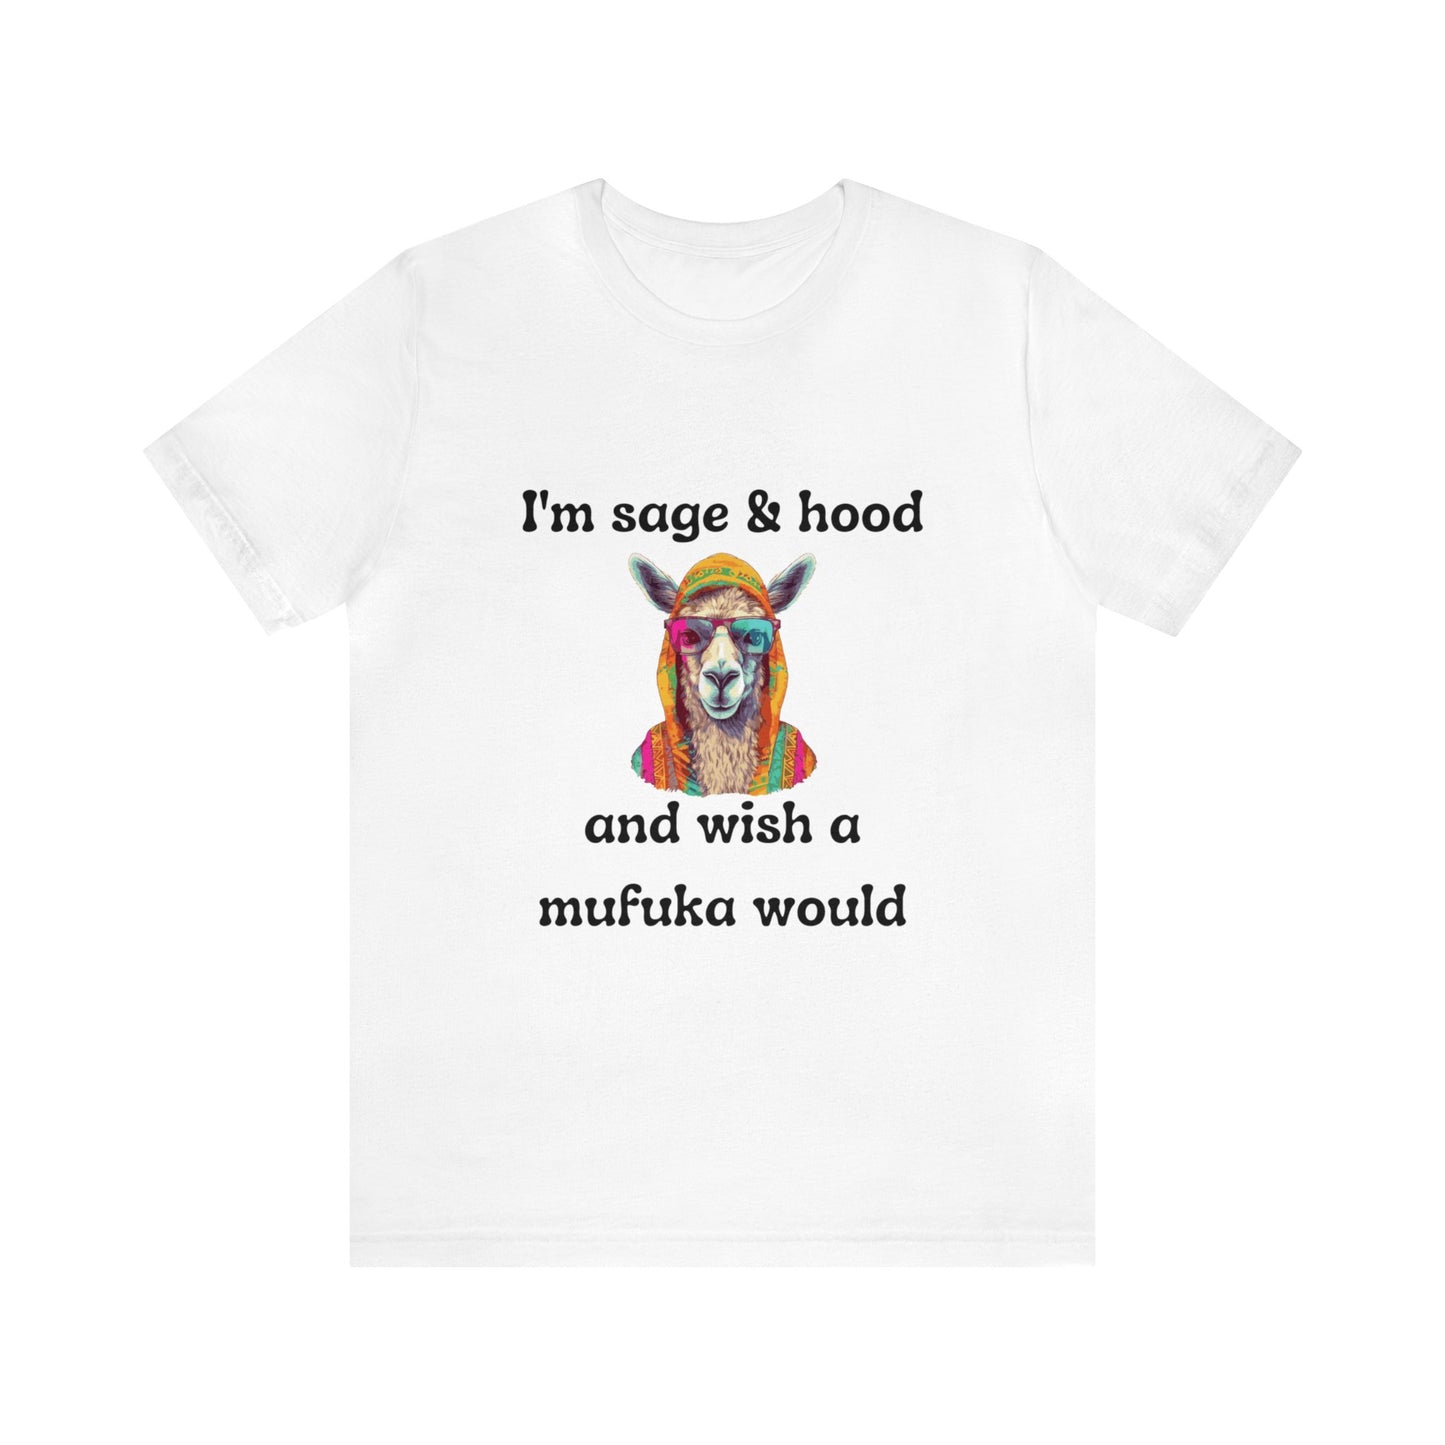 I'm Sage and Hood T-Shirt, Wish a mufuka would shirt